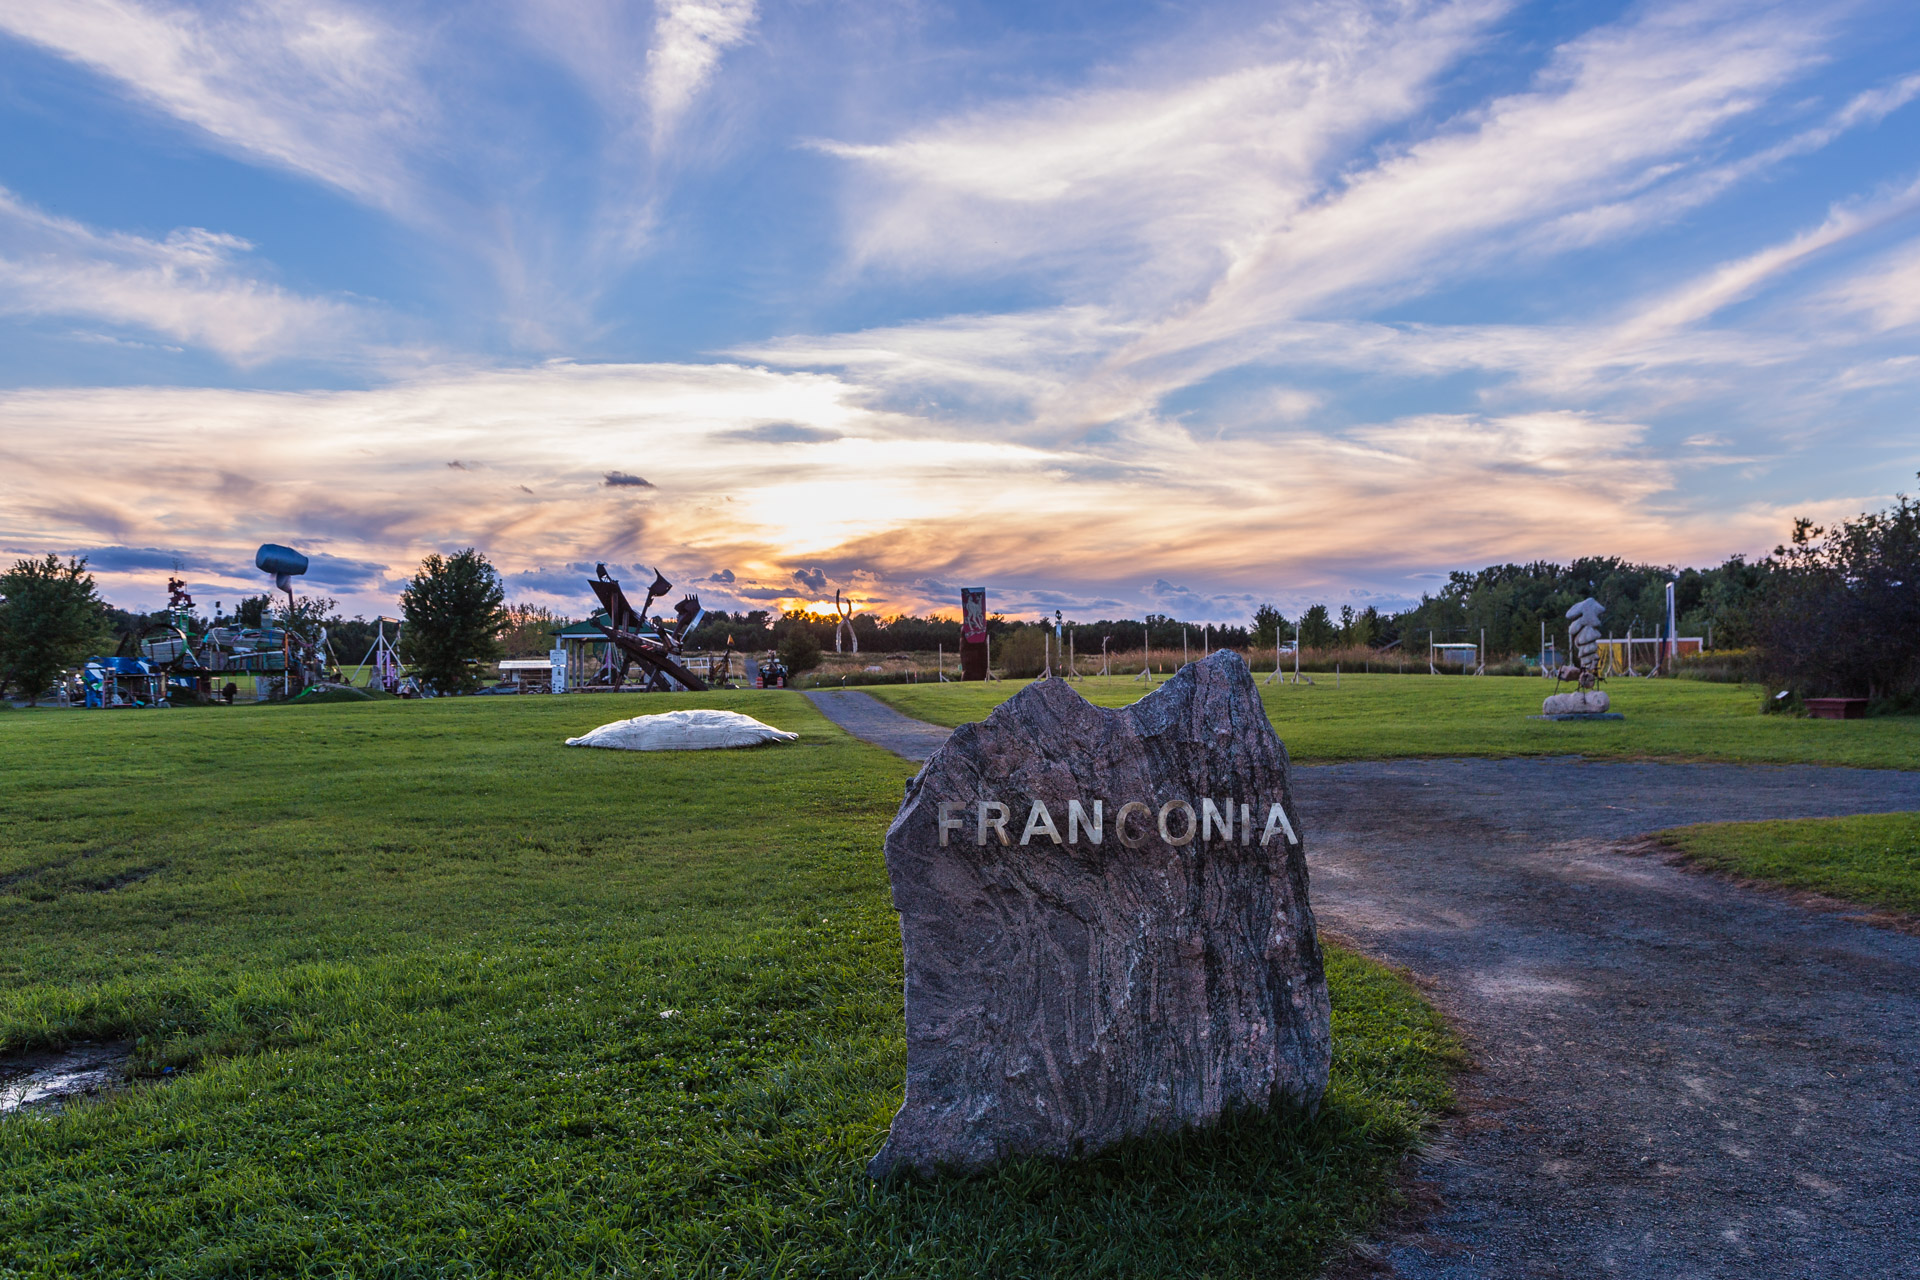 Franconia (sunset sign)